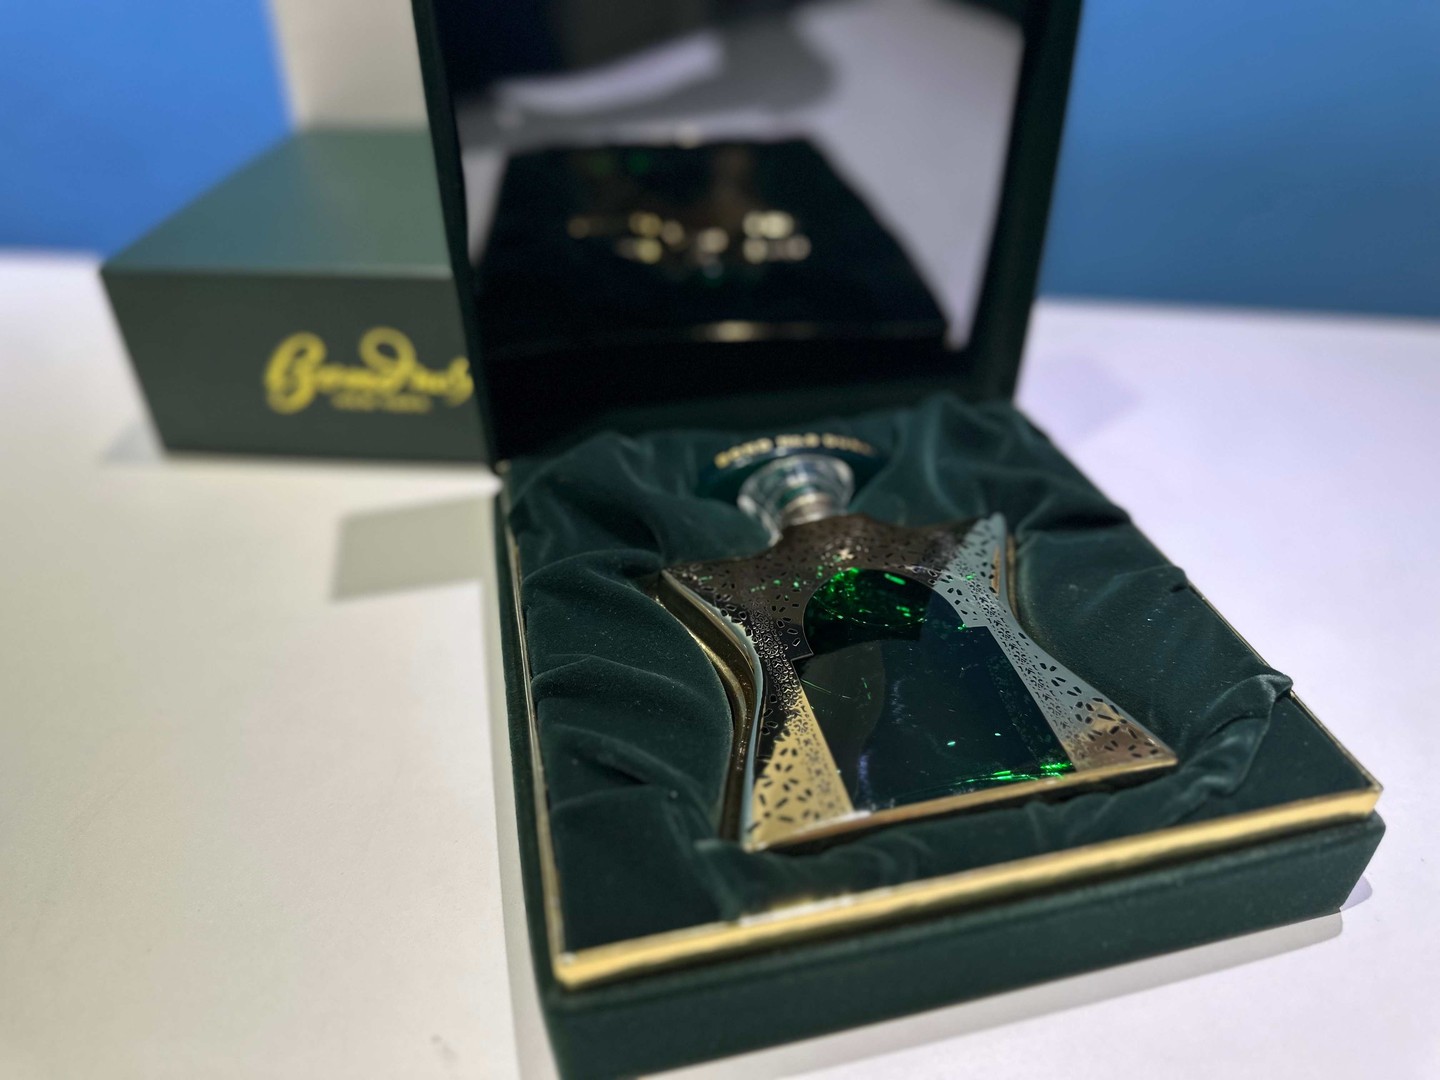 joyas, relojes y accesorios - Vendo Perfume Bond NO.9 DUBAI EMERALD 100ML Nuevo, Original, RD$ 19,500 NEG